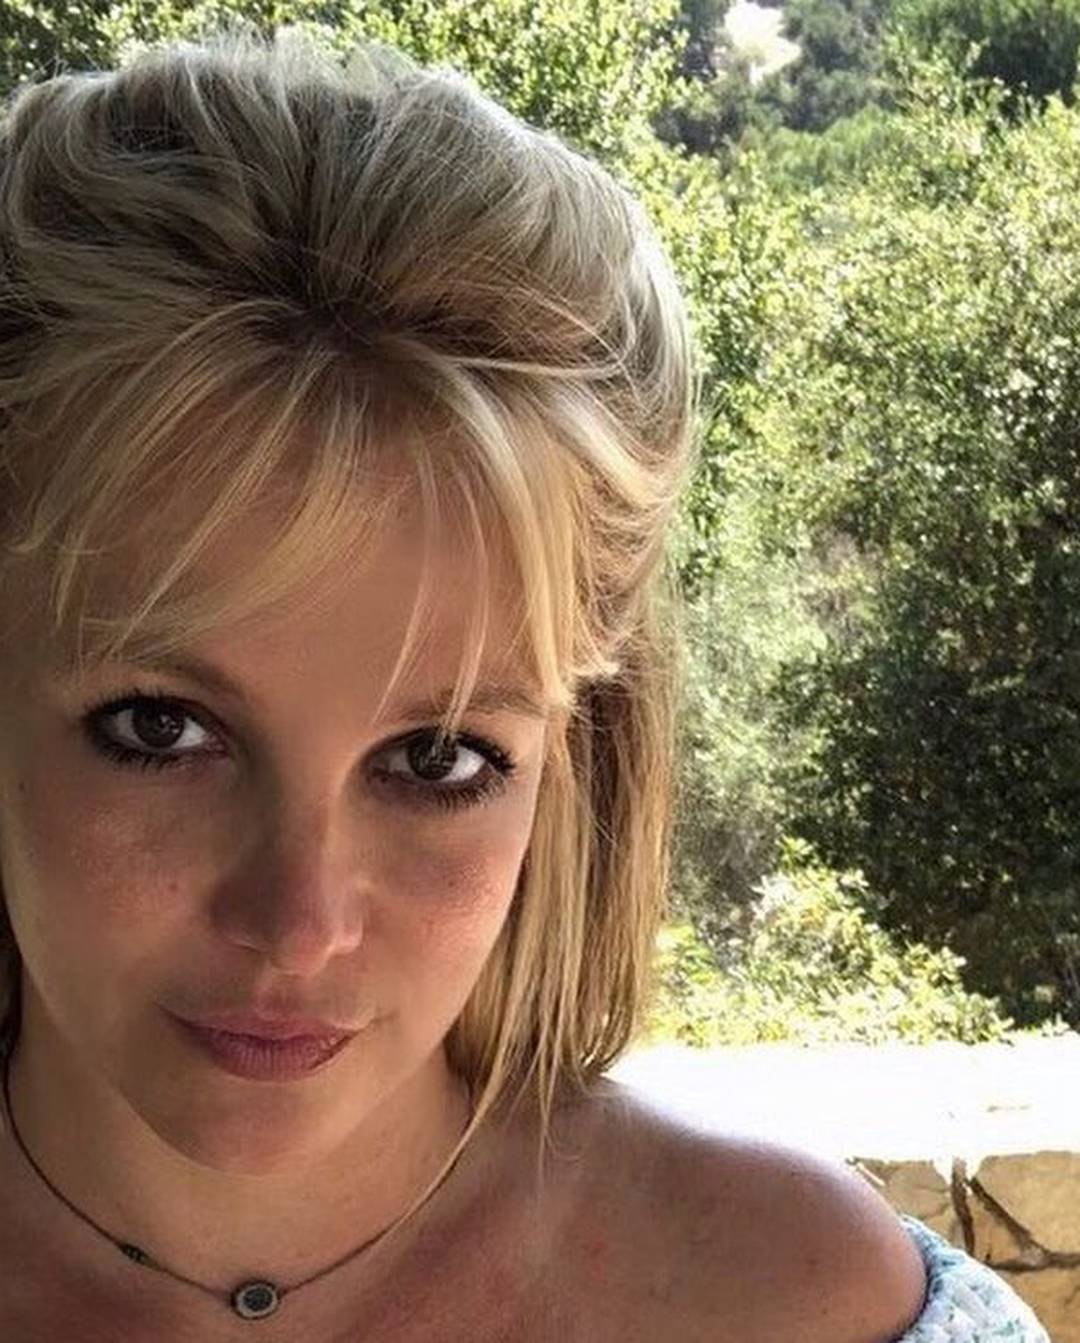 Britney Spears izazvala ljutnju s novom golom fotkom: 'Neka joj netko oduzme mobitel odmah'